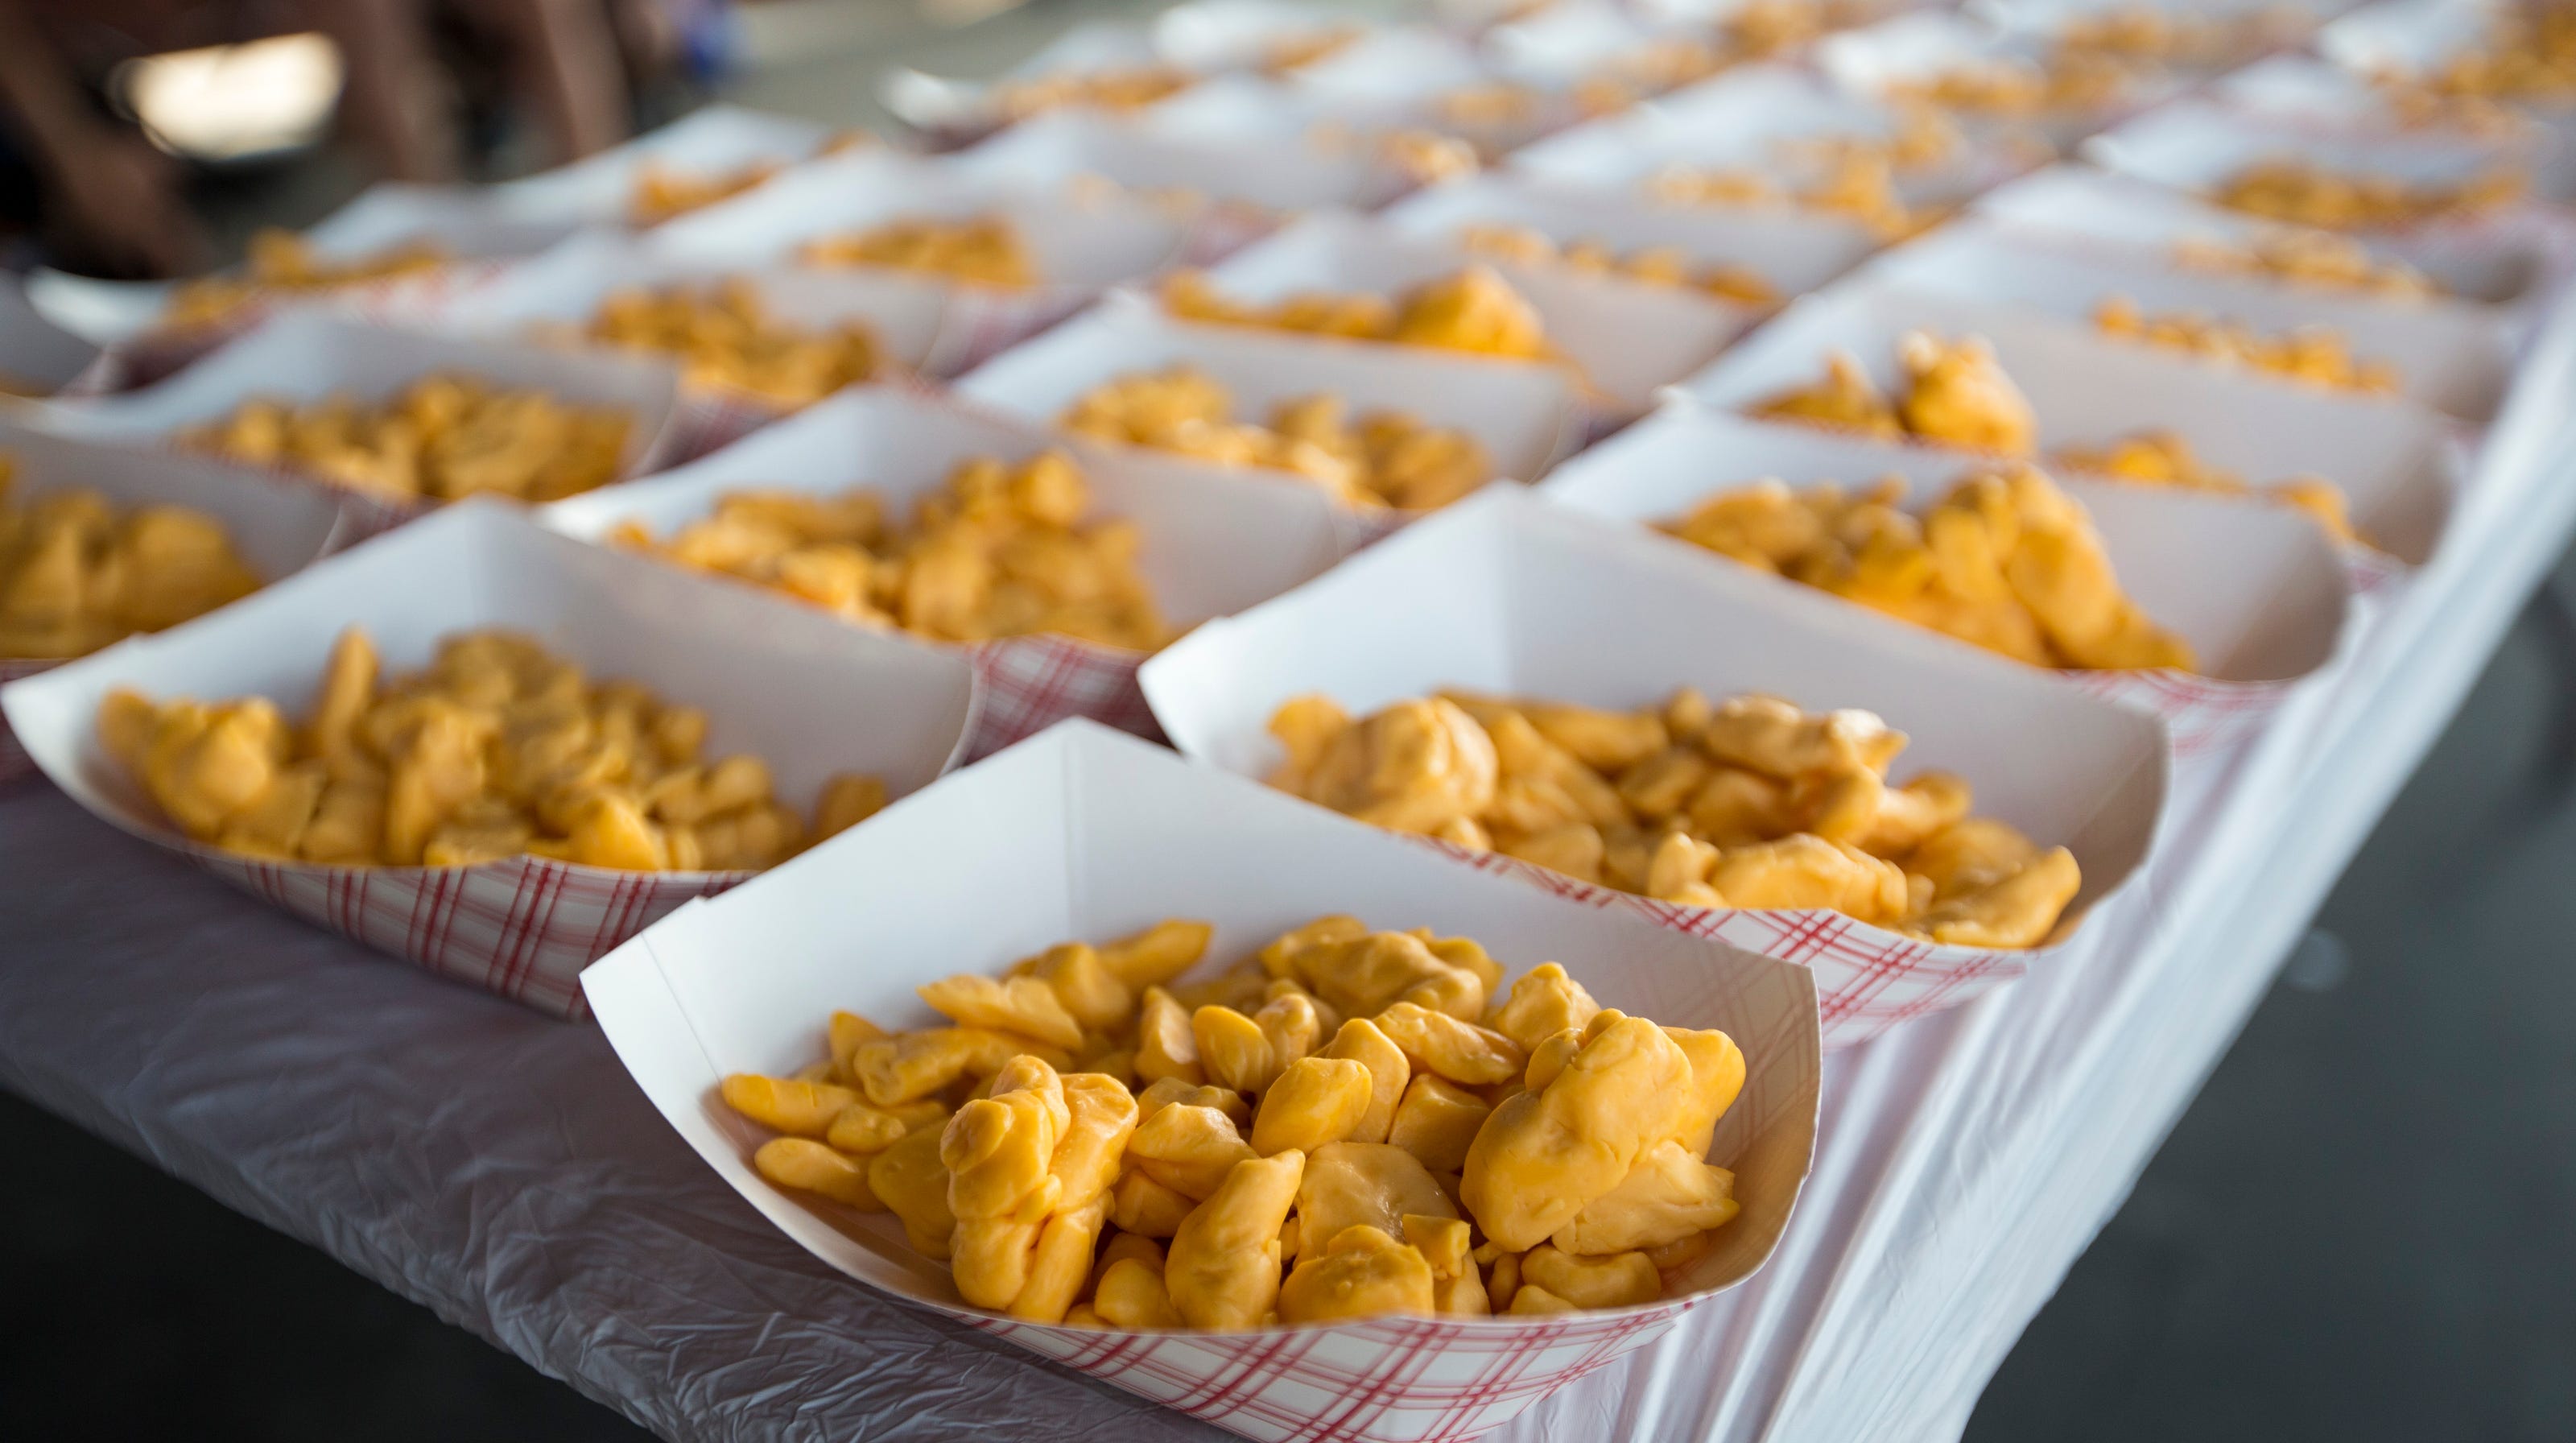 Wisconsin State Fair foods return, drivethru cheese curds, corn dogs